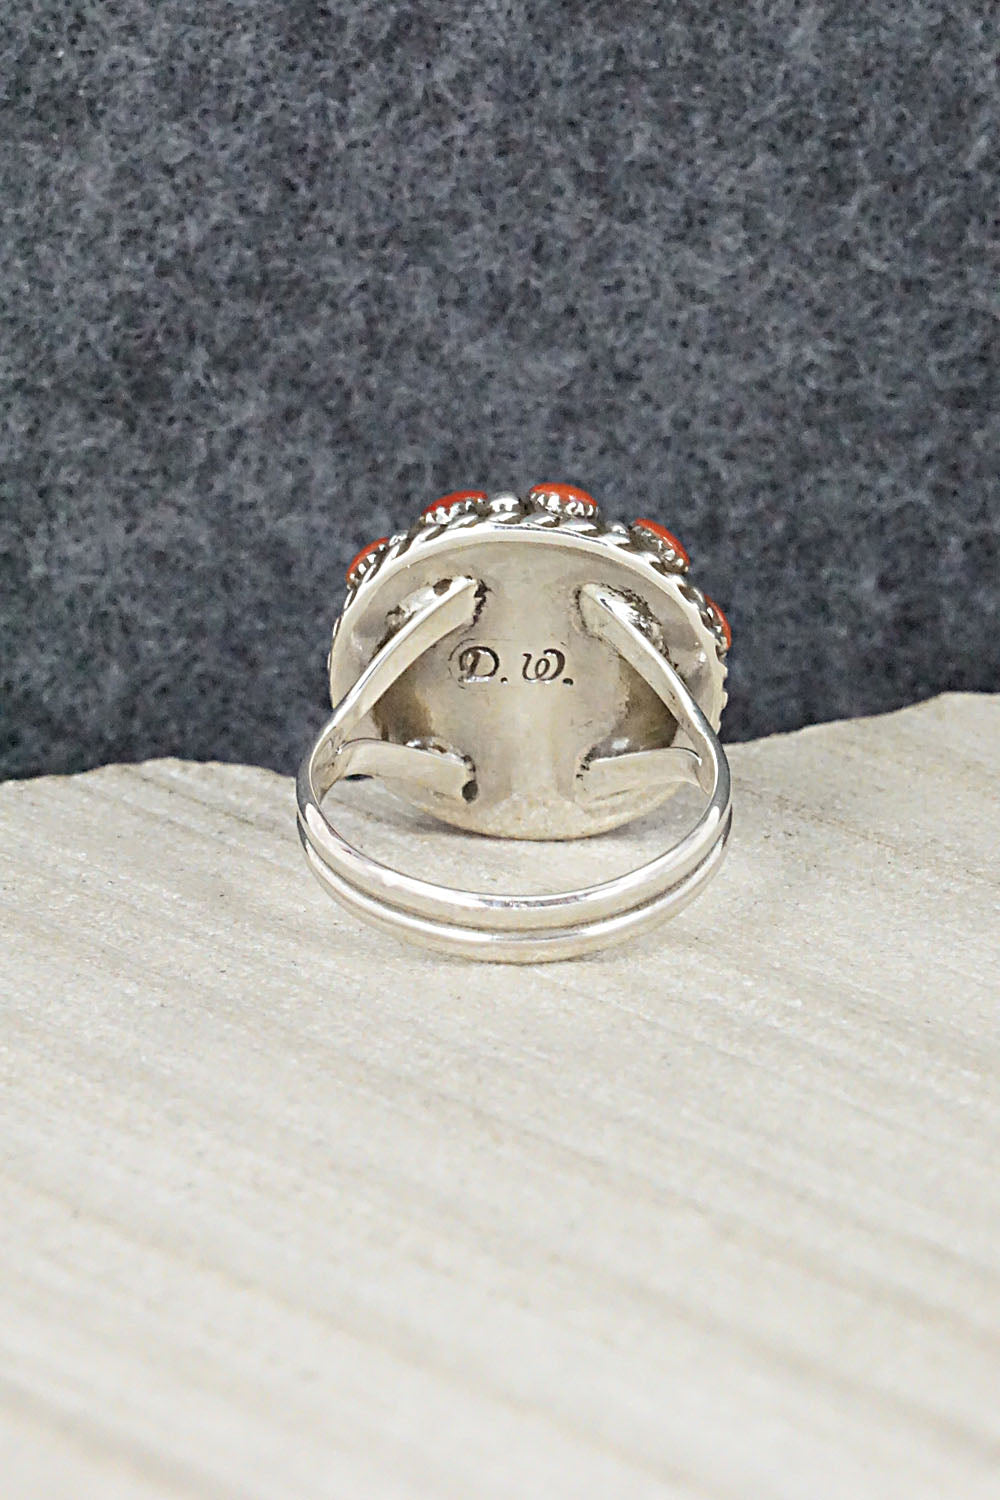 Coral & Sterling Silver Ring - Darlene Webothee - Size 7.25